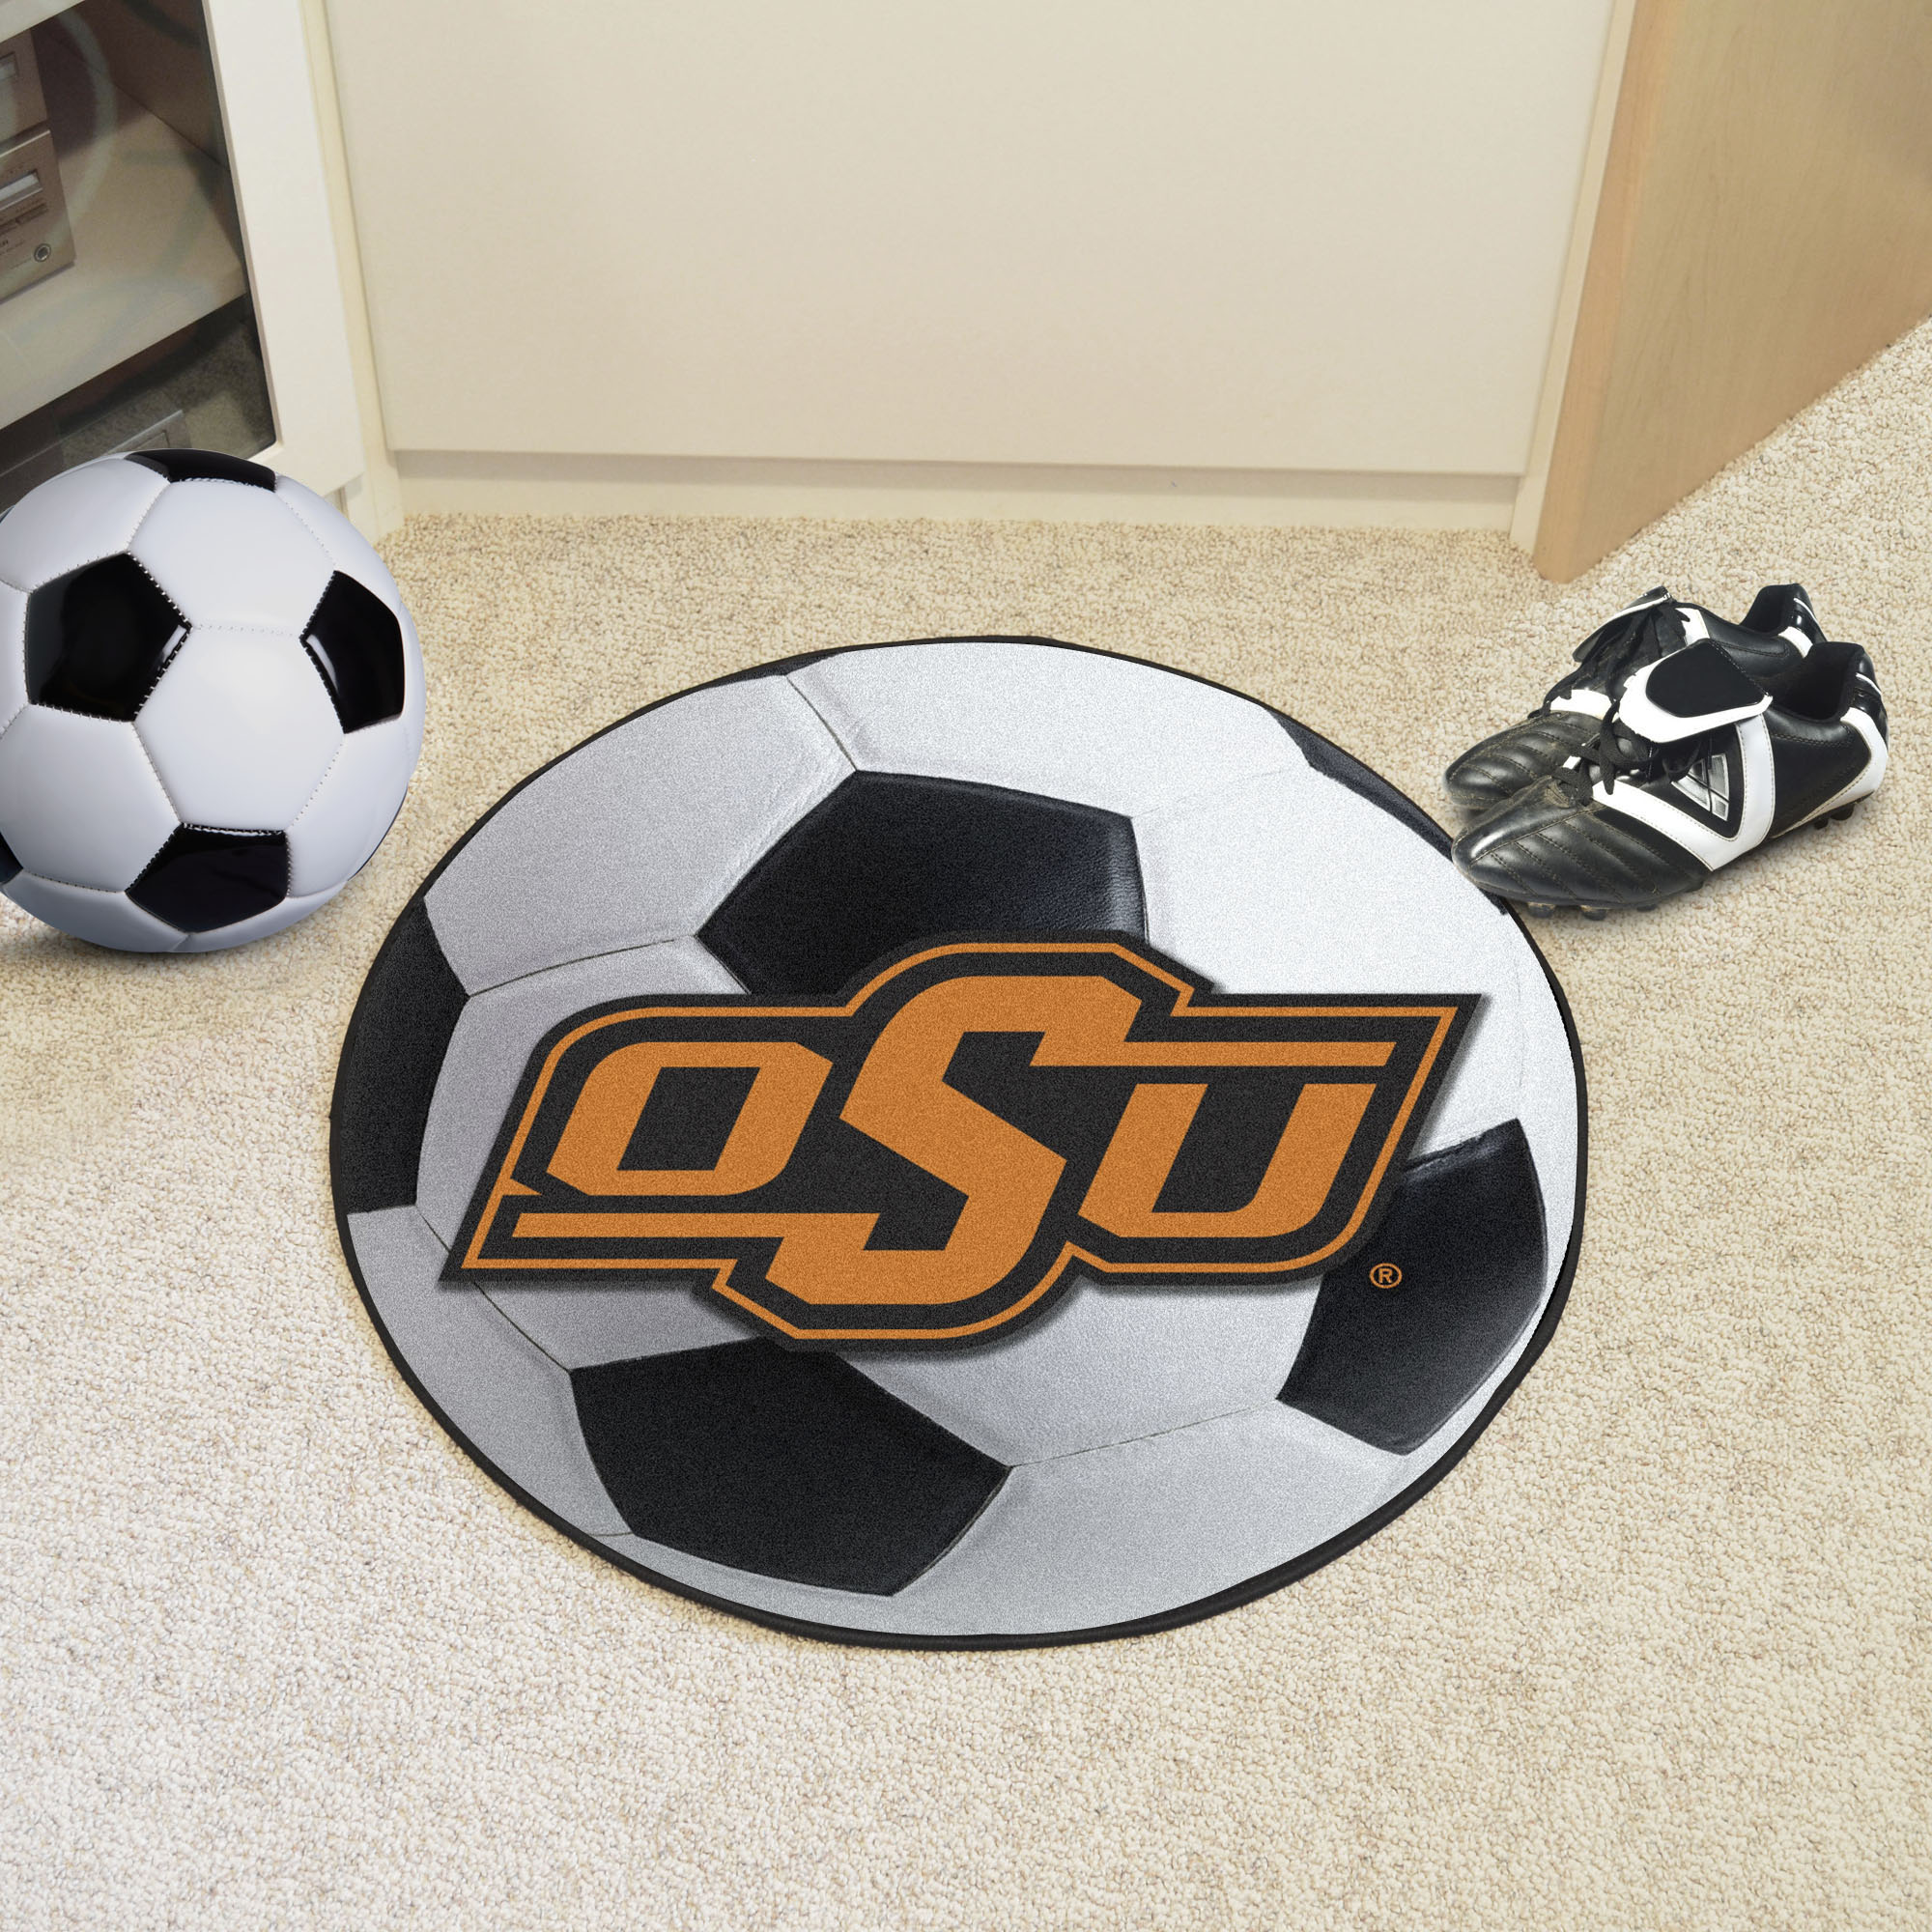 Oklahoma State University Ball Shaped Area Rugs (Ball Shaped Area Rugs: Soccer Ball)